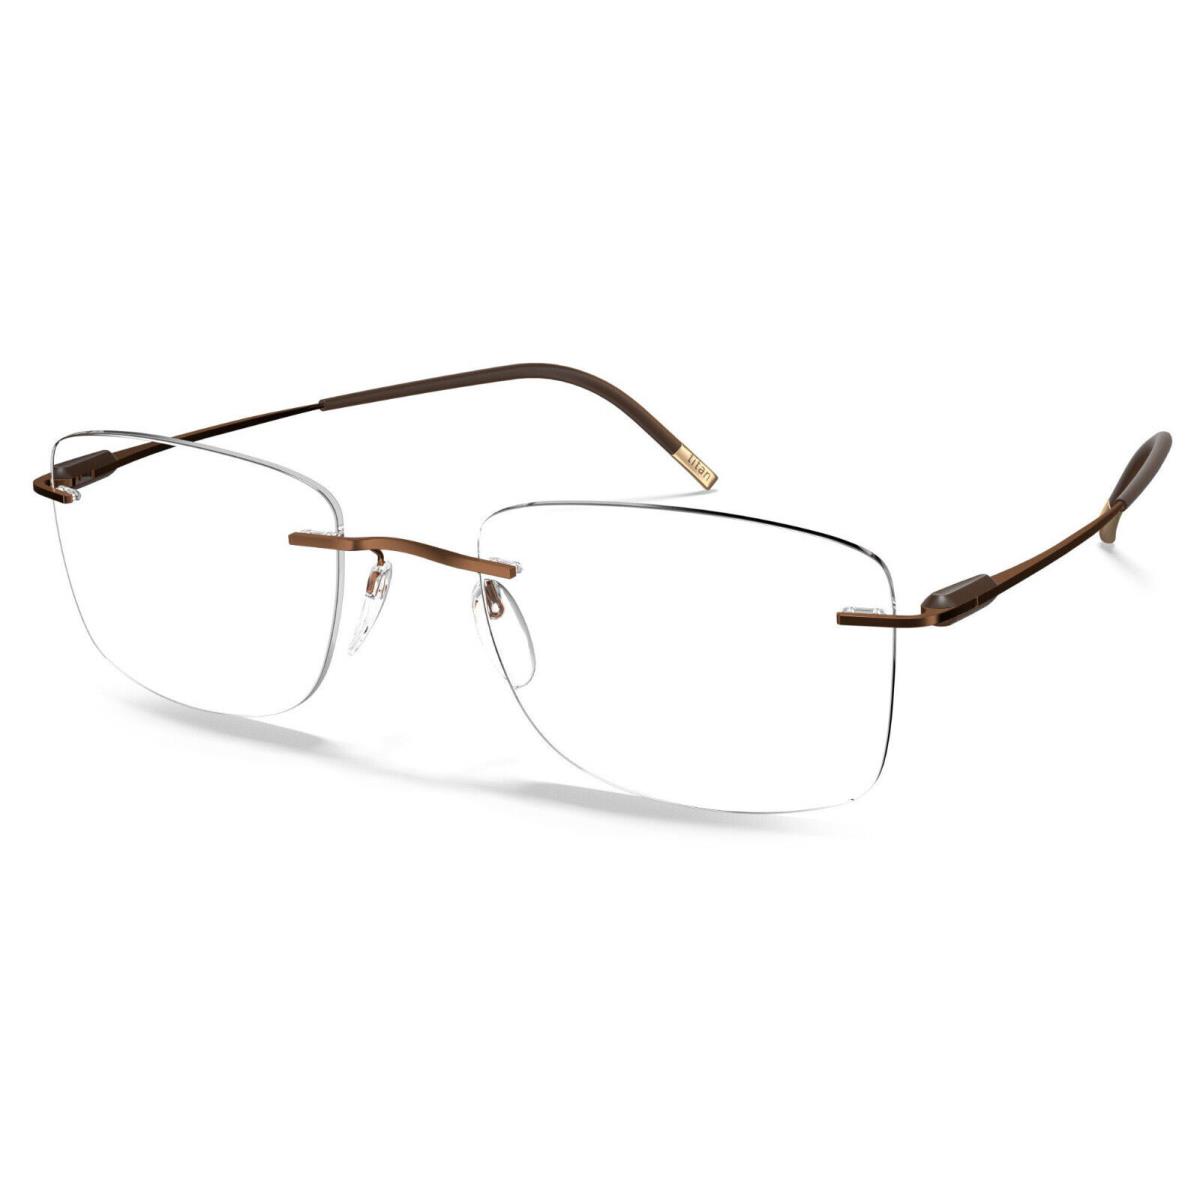 Silhouette Eyeglasses Purist Harmonious Brown 56MM-19MM-150MM 5561-BS-6040-56MM$